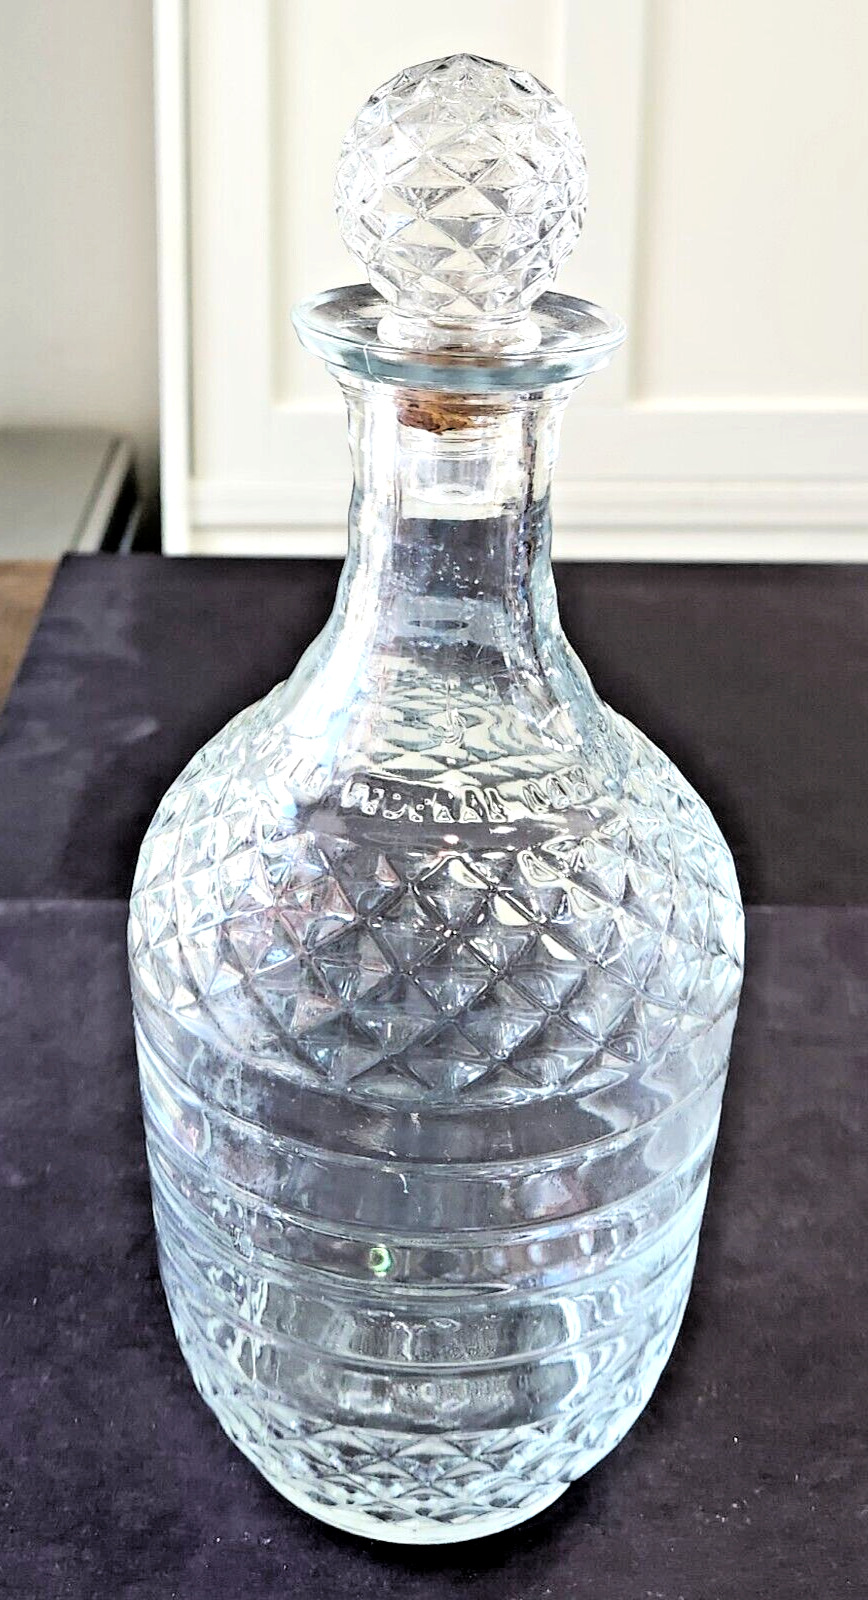 1947 Glenmore KENTUCKY TAVERN Straight Bourbon Whiskey Clear Decanter w/ Stopper